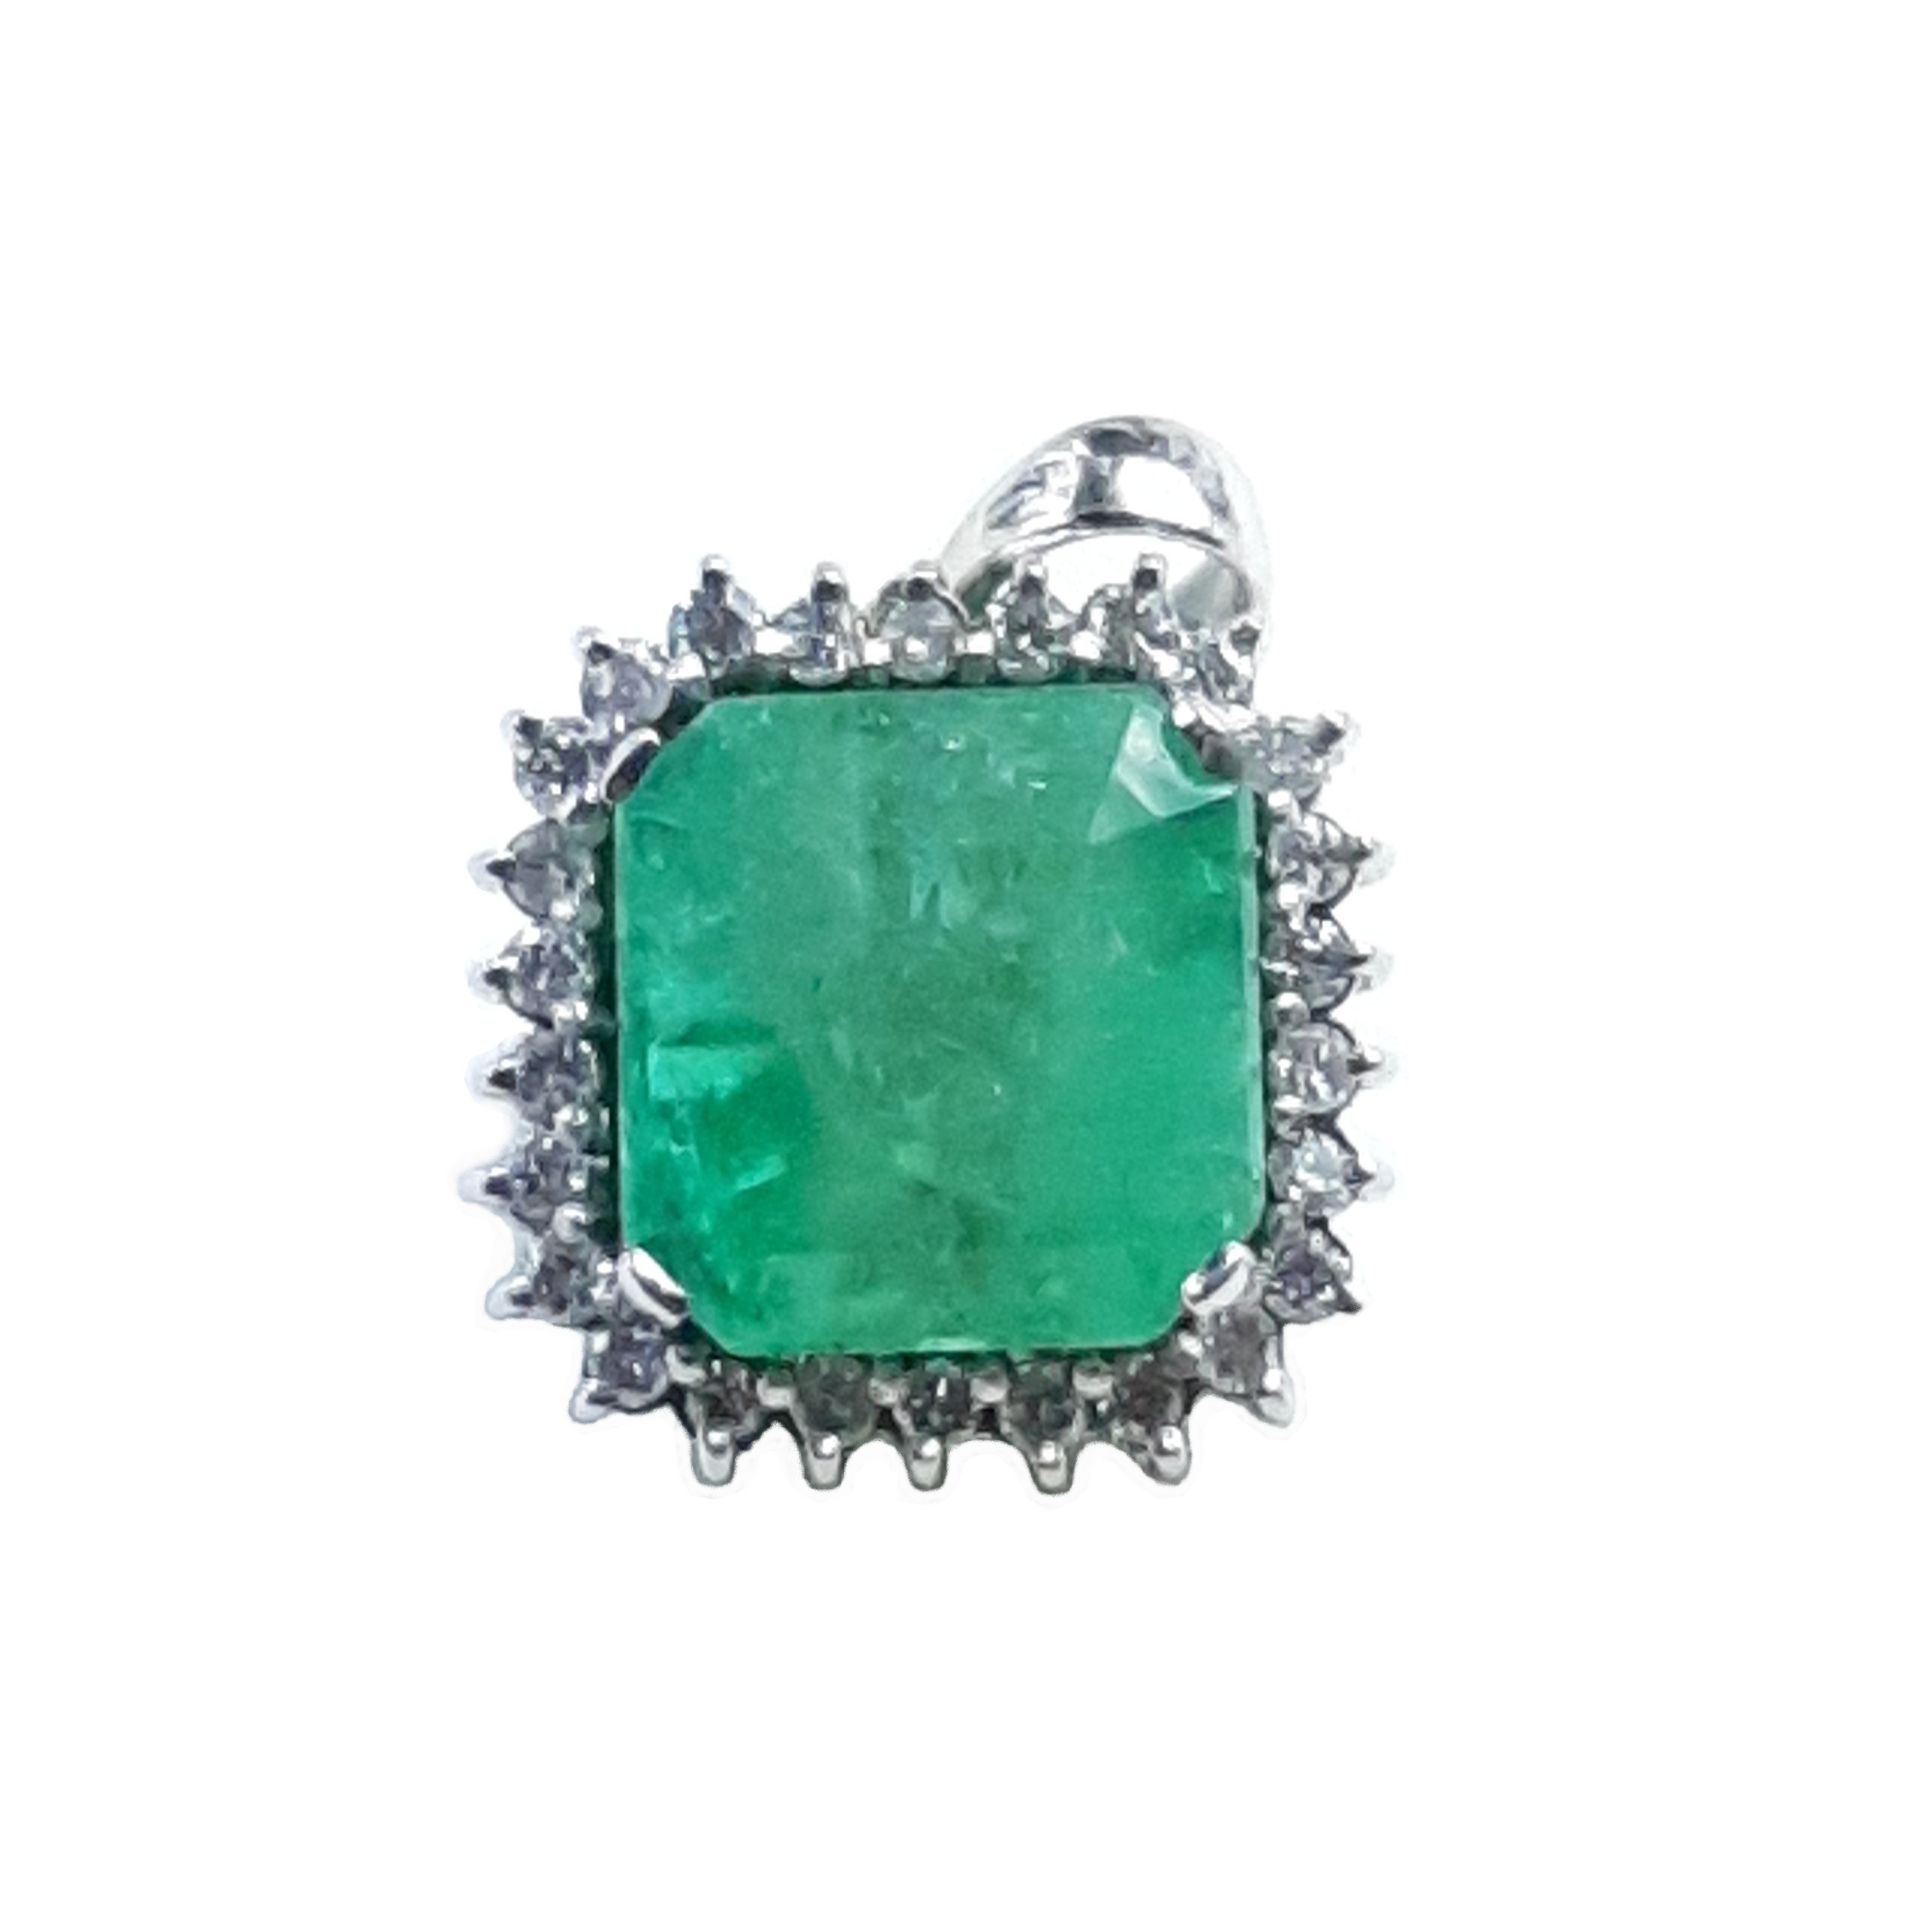 Pendentif émeraude 13.37 cts - Colombie EMERALD PENDANT - Square emerald with cu&hellip;